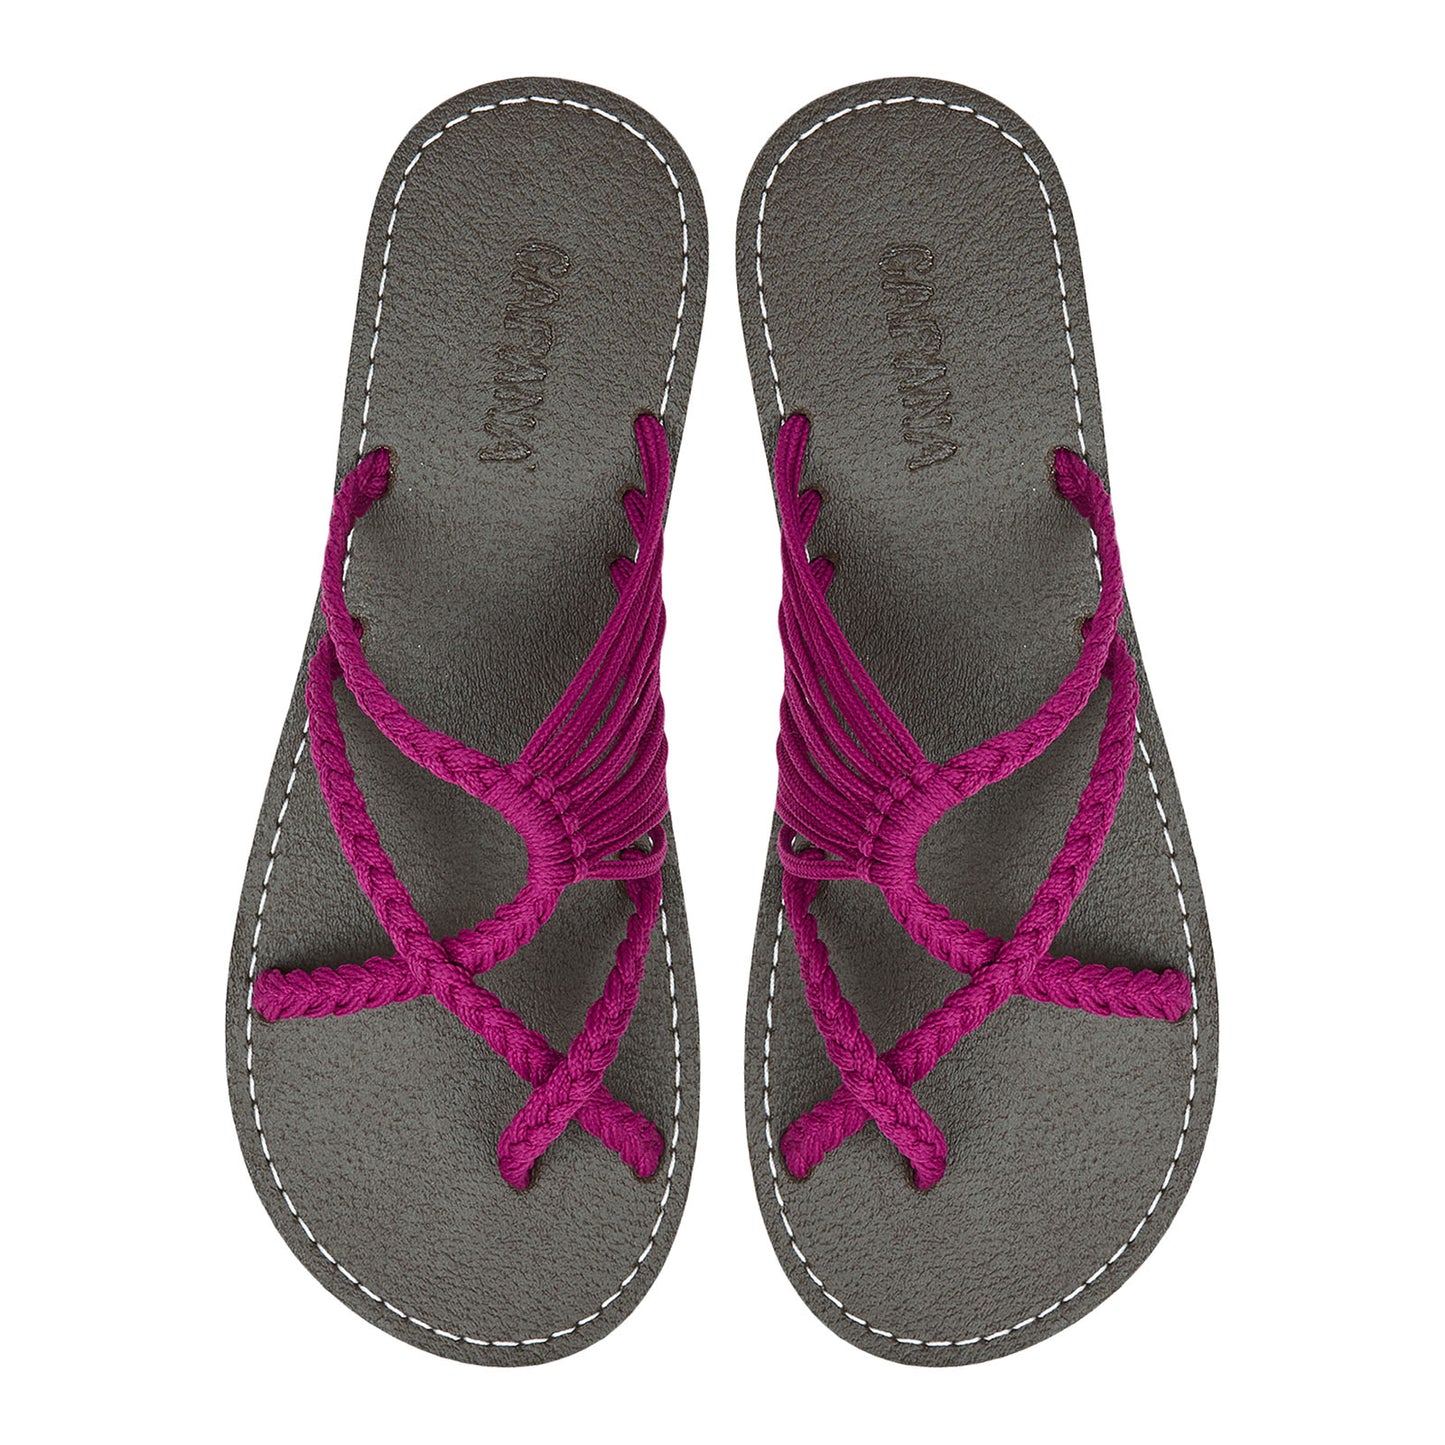 Oceanbliss African Violet Rope Sandals Purple Crisscross design Flat Handmade sandals for women